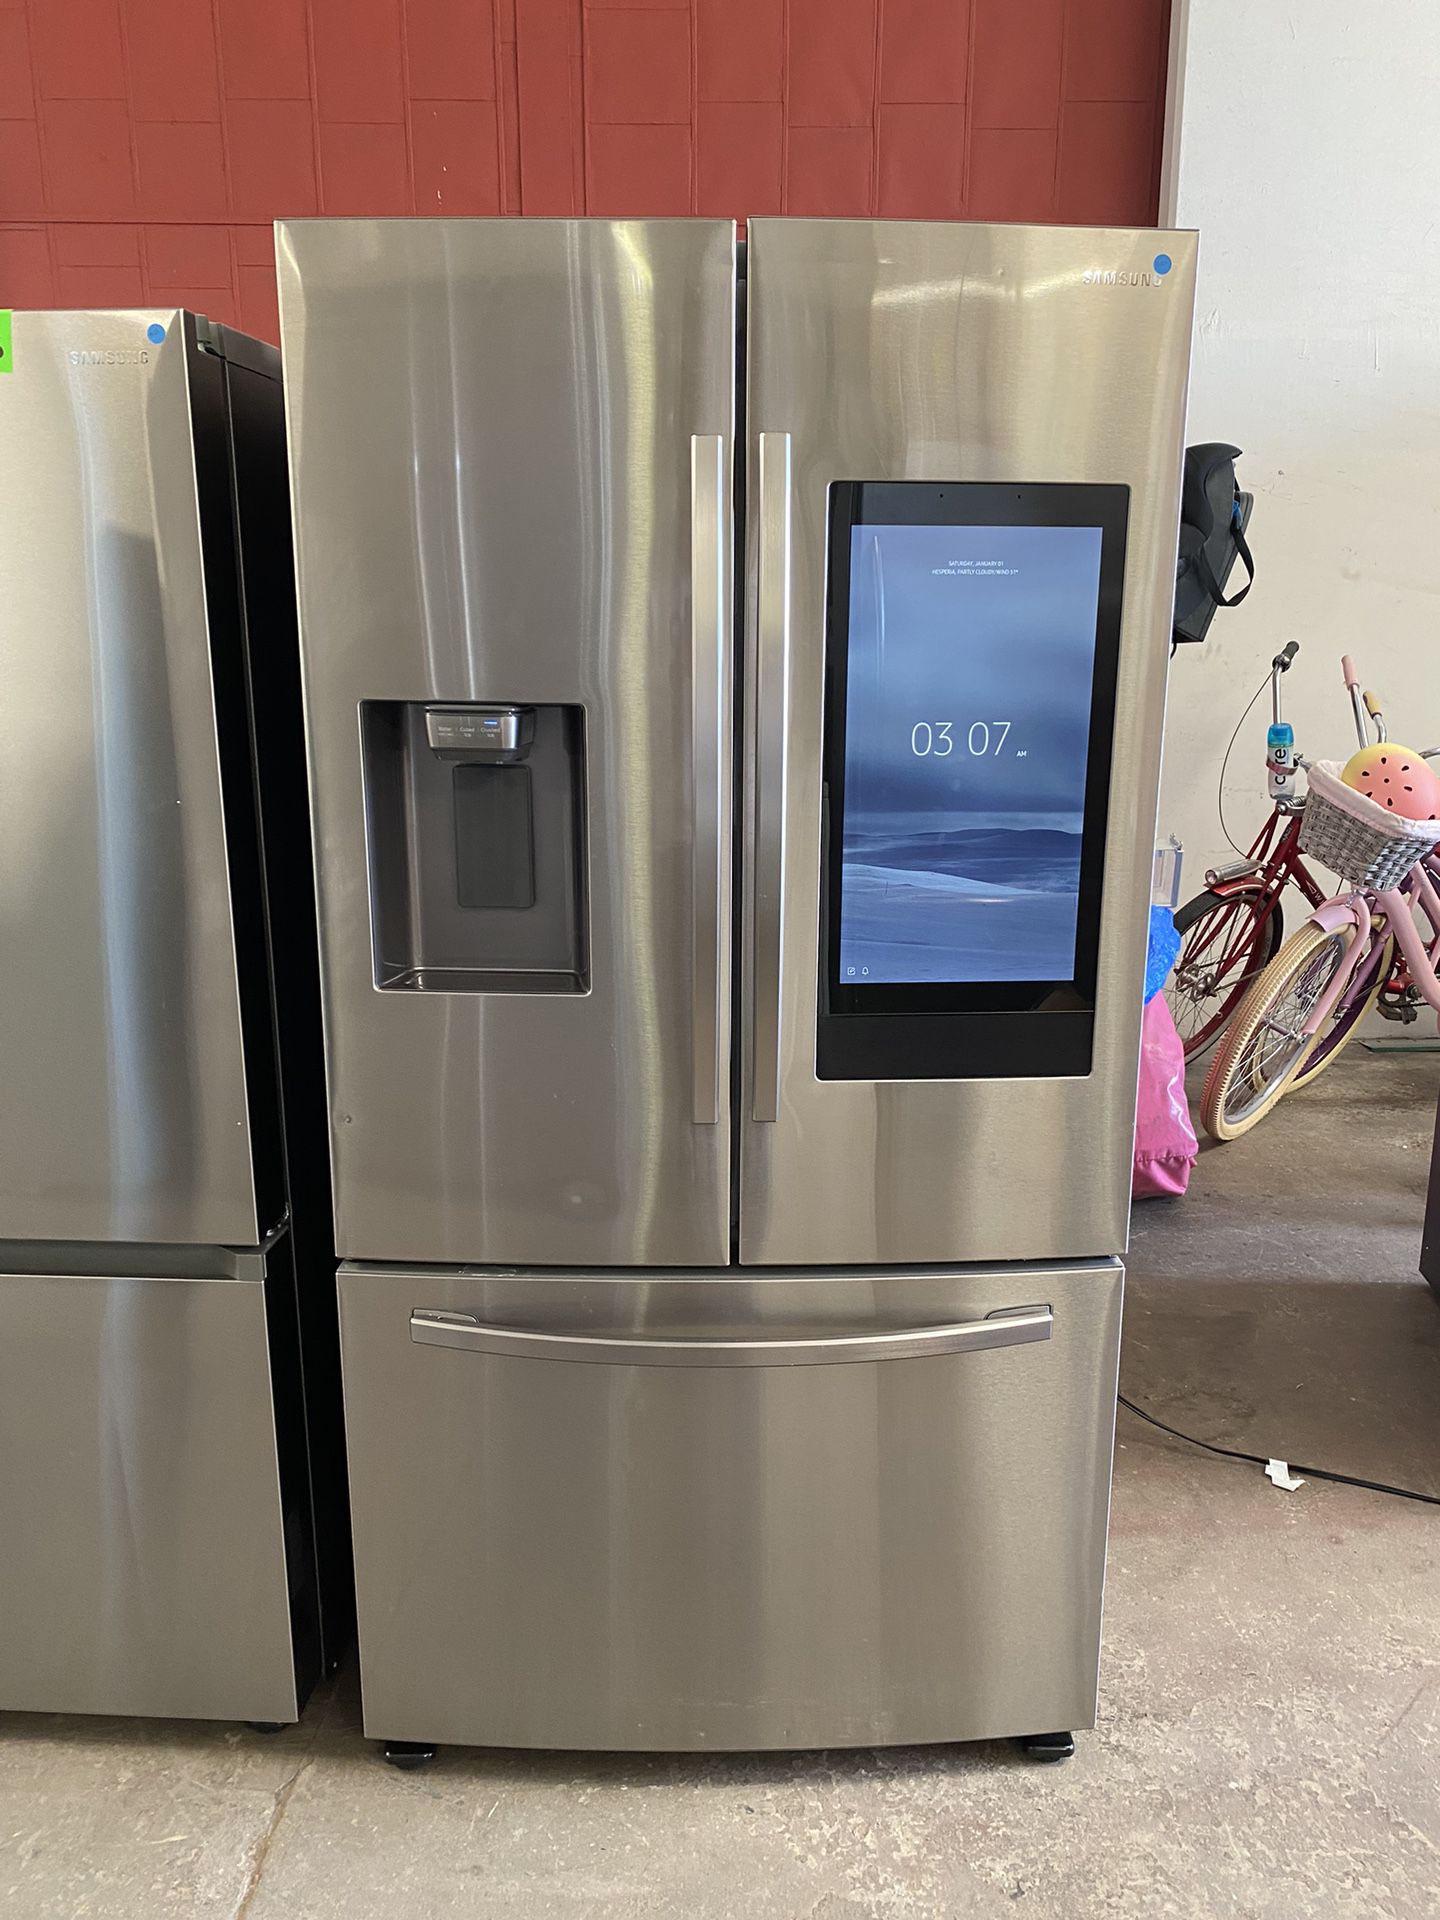 Samsung Family Hub Refrigerator 